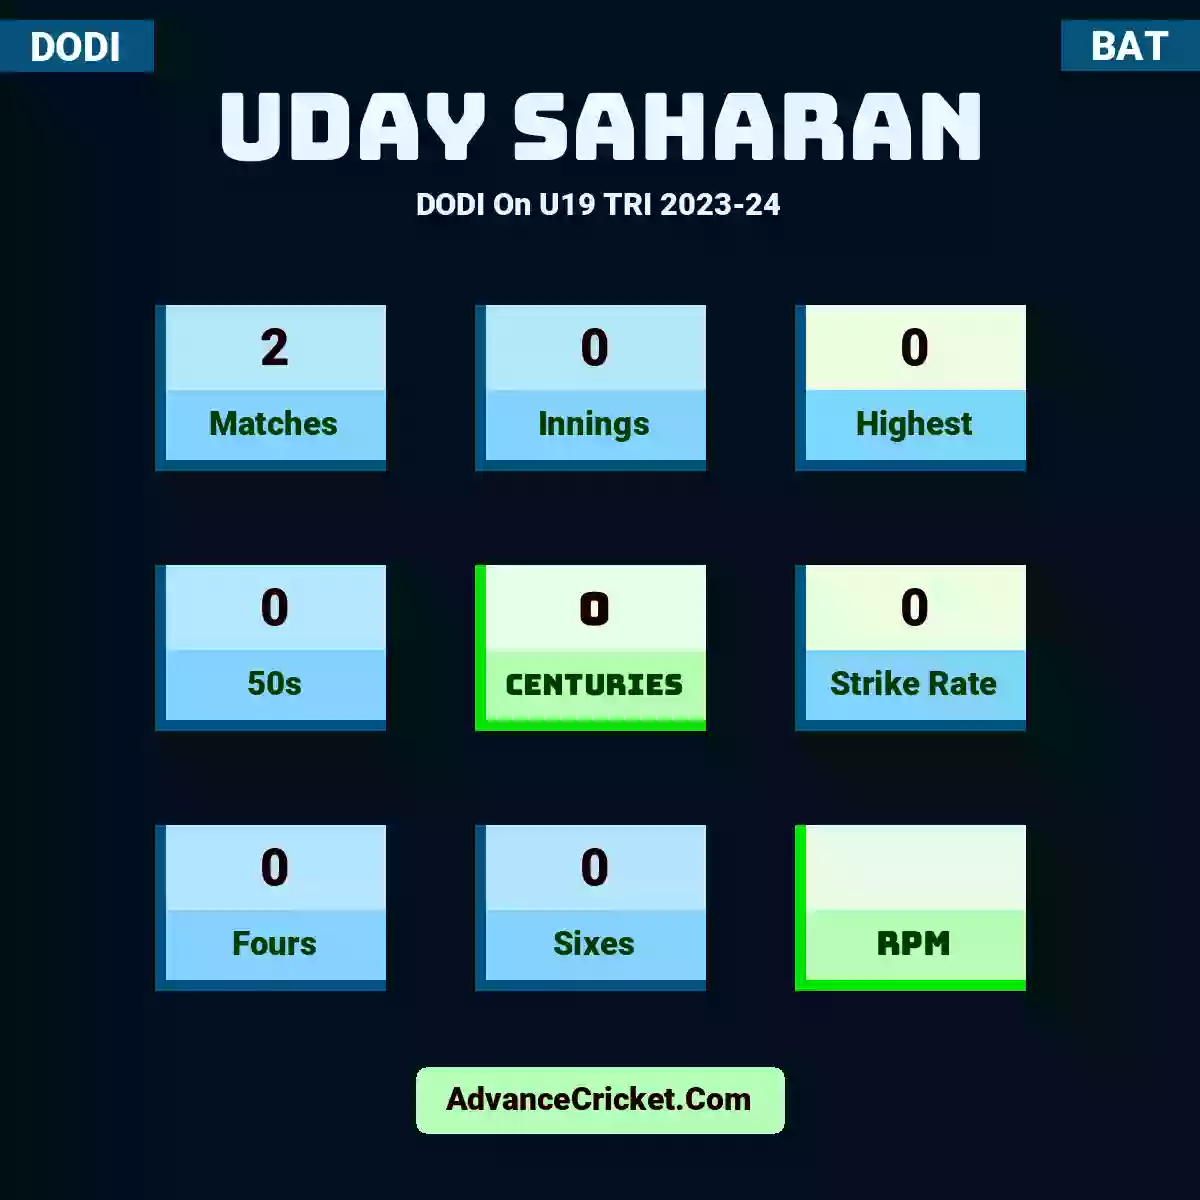 Uday Saharan DODI  On U19 TRI 2023-24, Uday Saharan played 2 matches, scored 0 runs as highest, 0 half-centuries, and 0 centuries, with a strike rate of 0. U.Saharan hit 0 fours and 0 sixes.